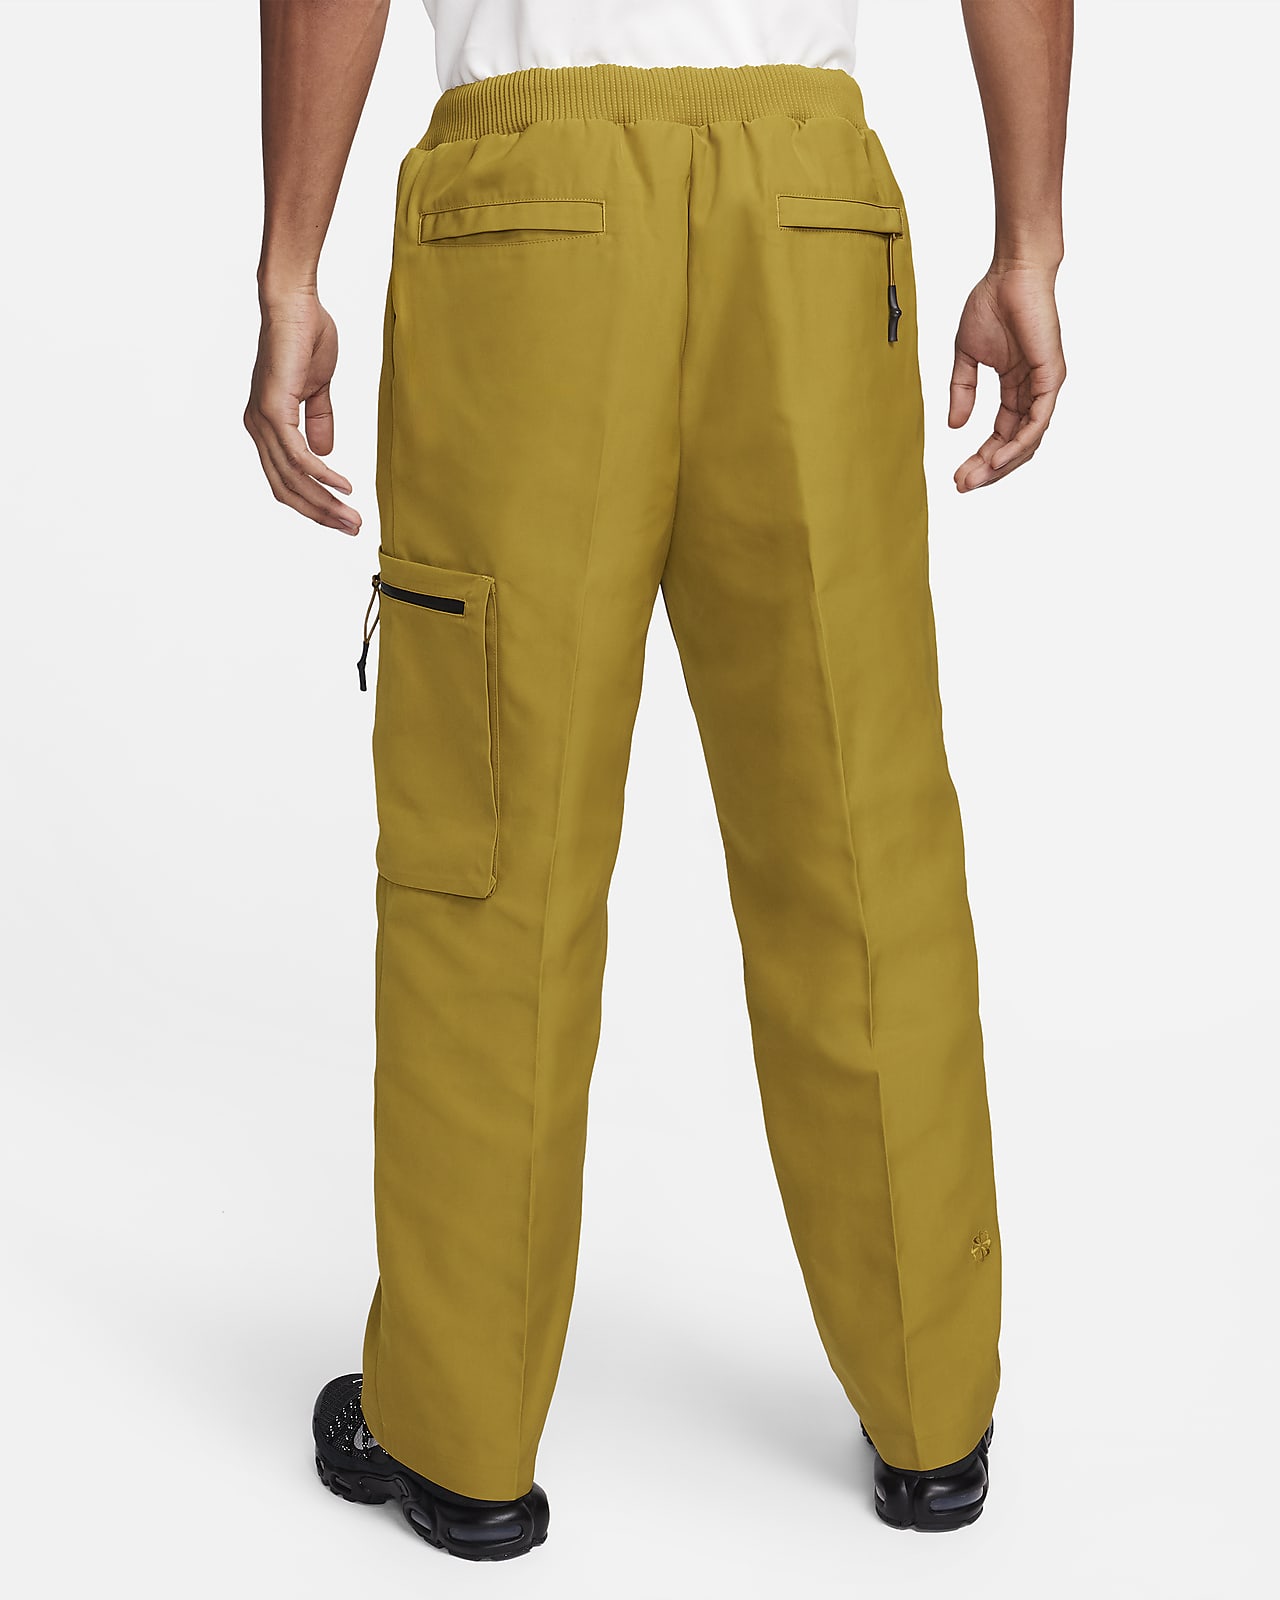 Nike Sportswear Tech Pack Men's Woven Utility Pants